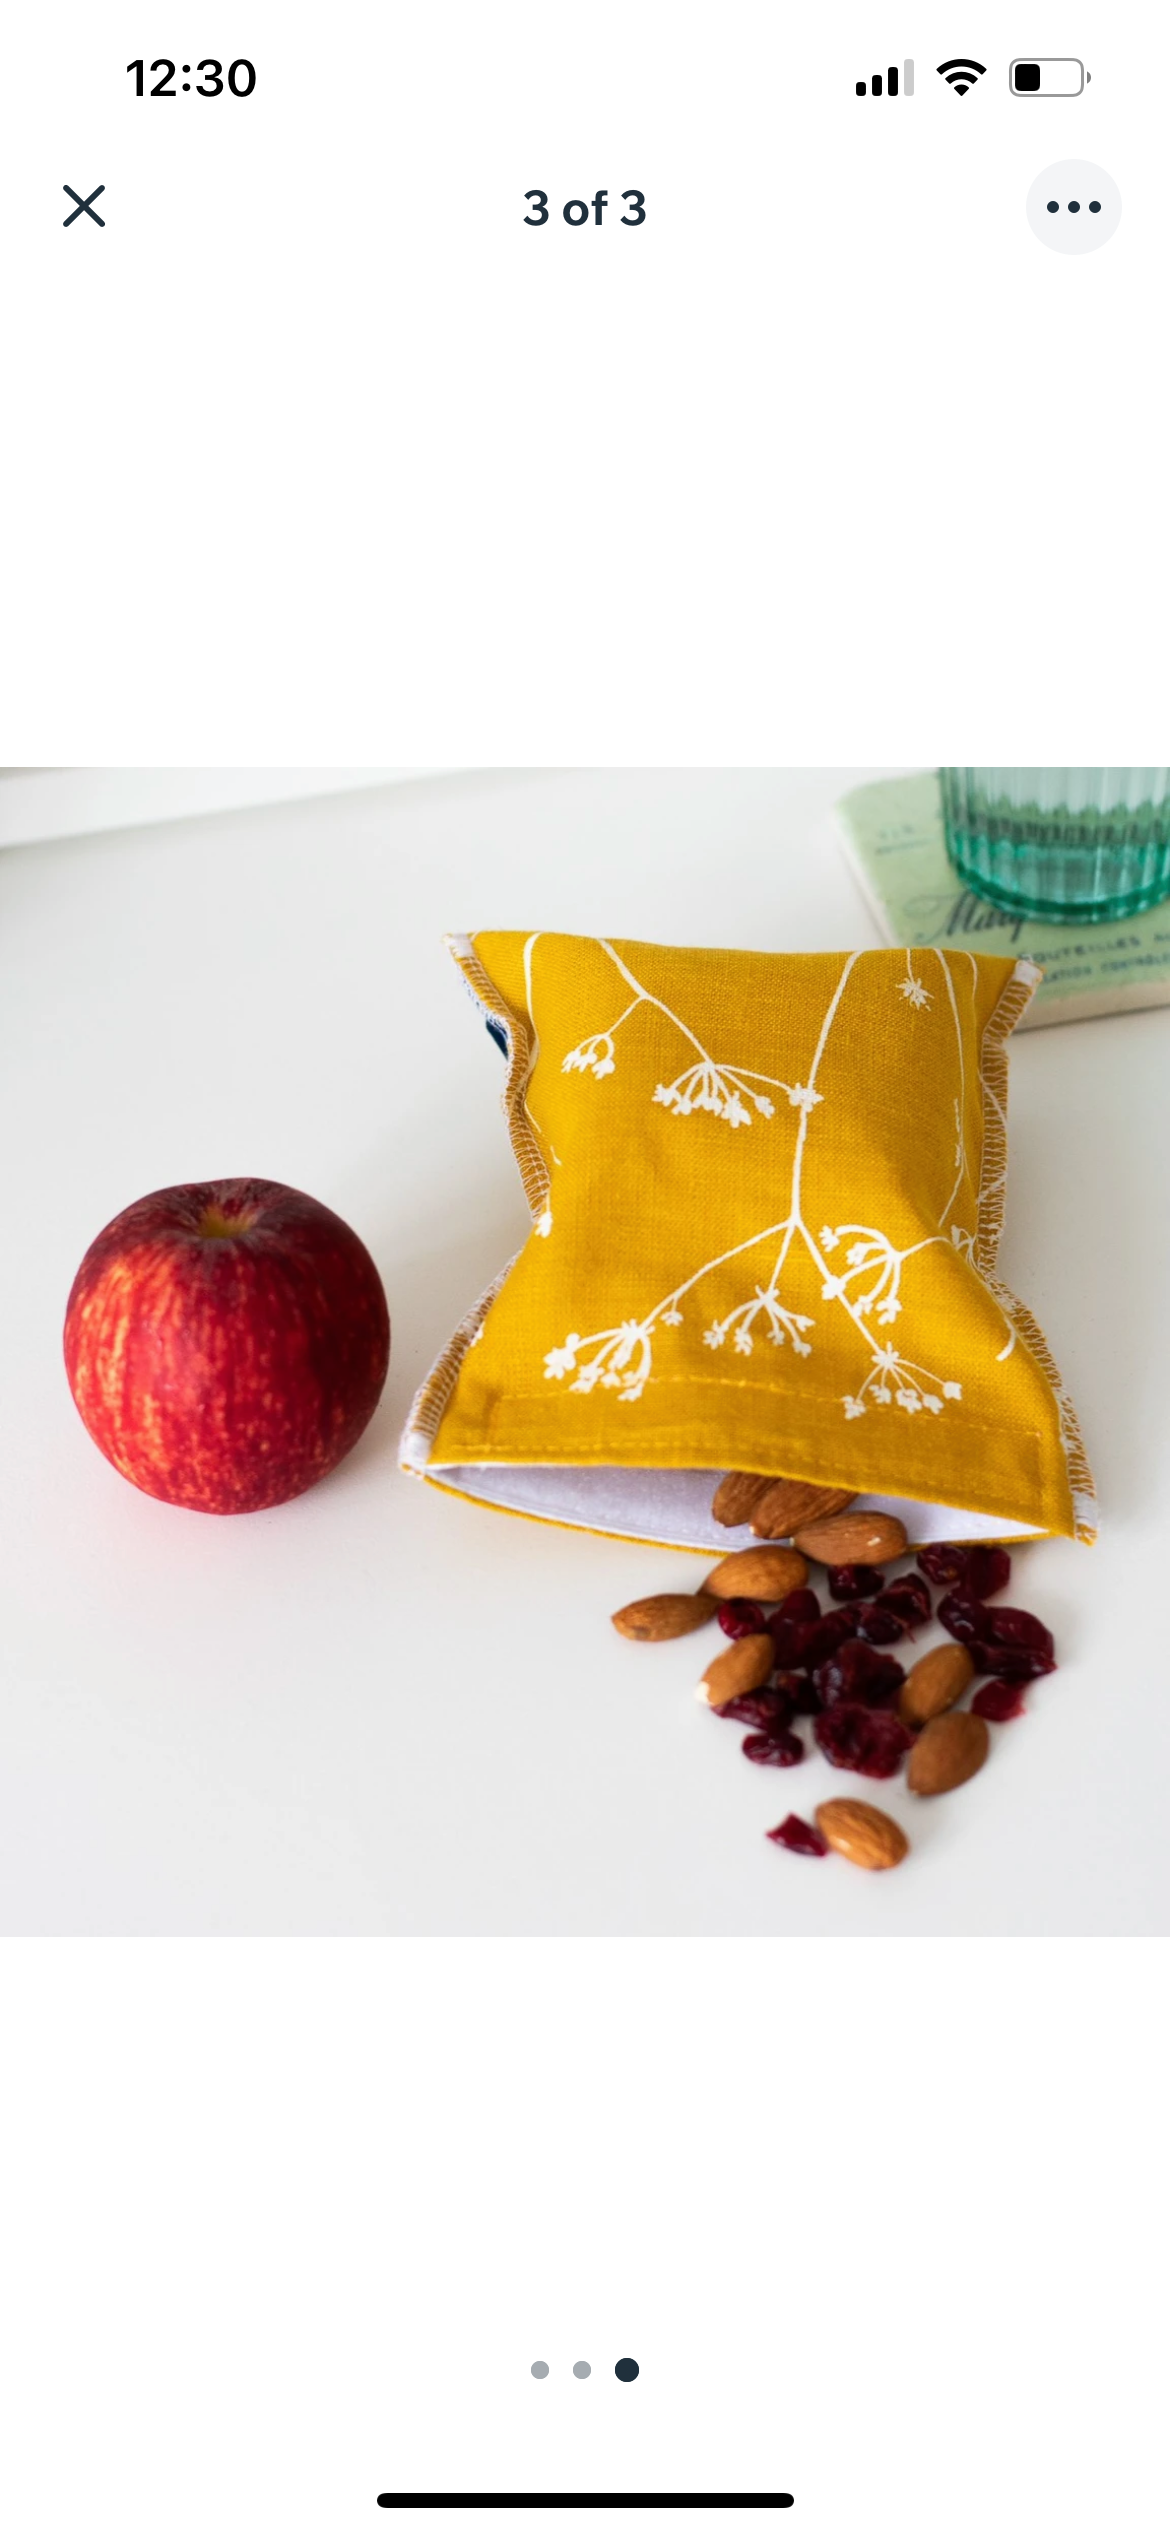 Reusable Snack Bag Mustard